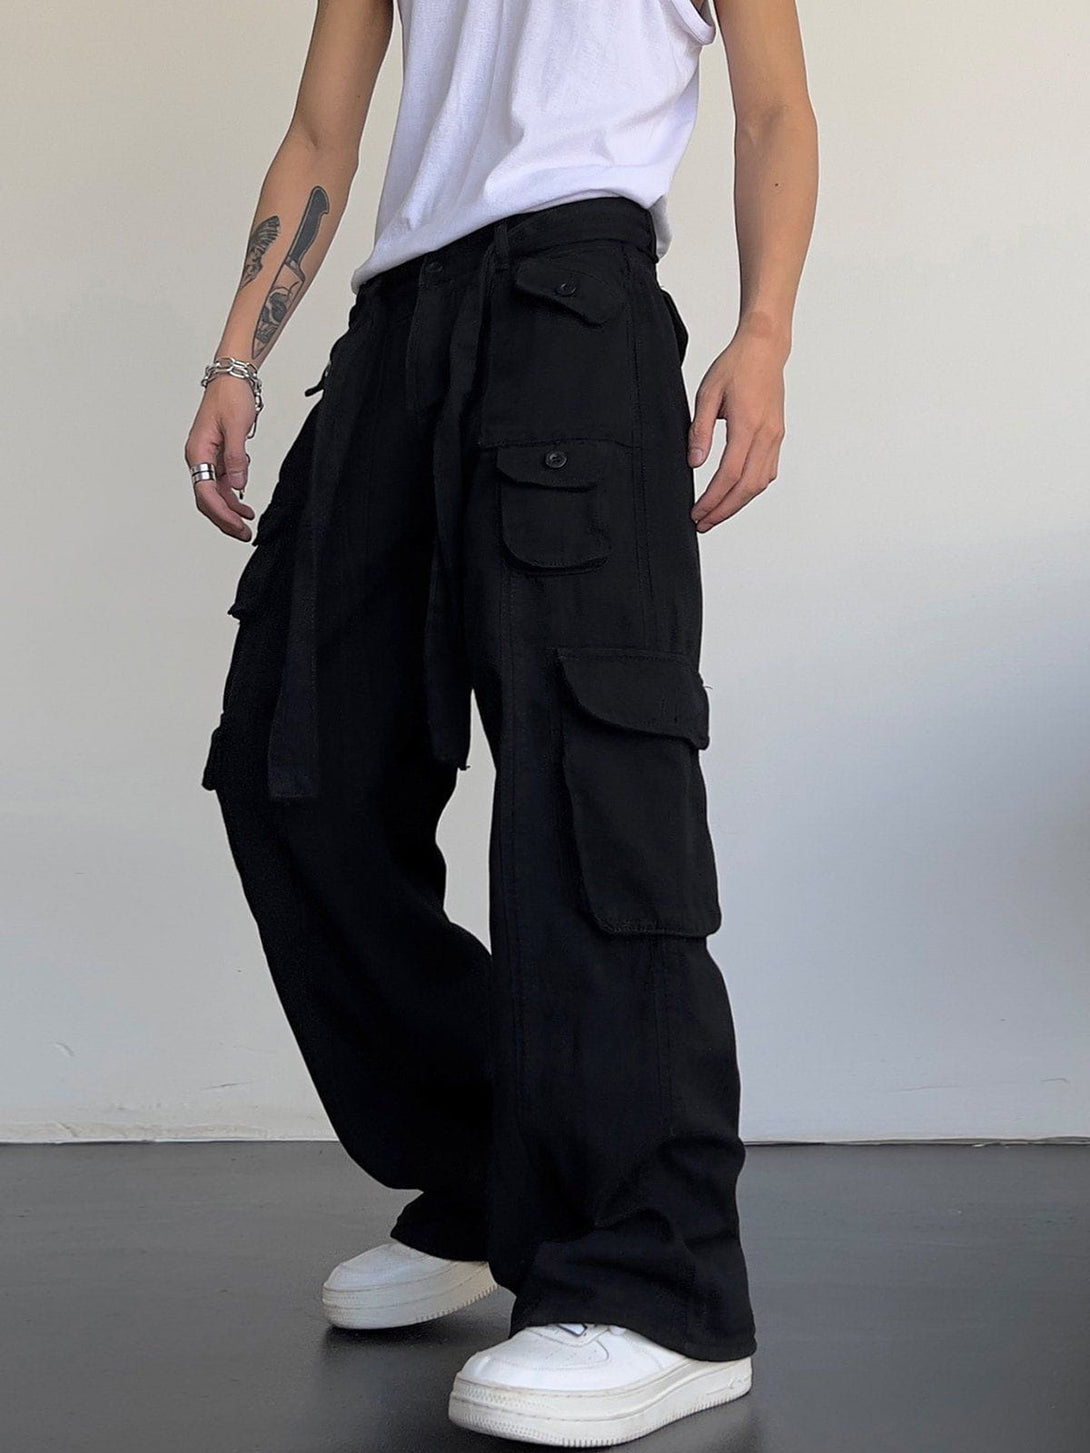 Majesda® - Large Pocket Webbing Cargo Pants outfit ideas streetwear fashion